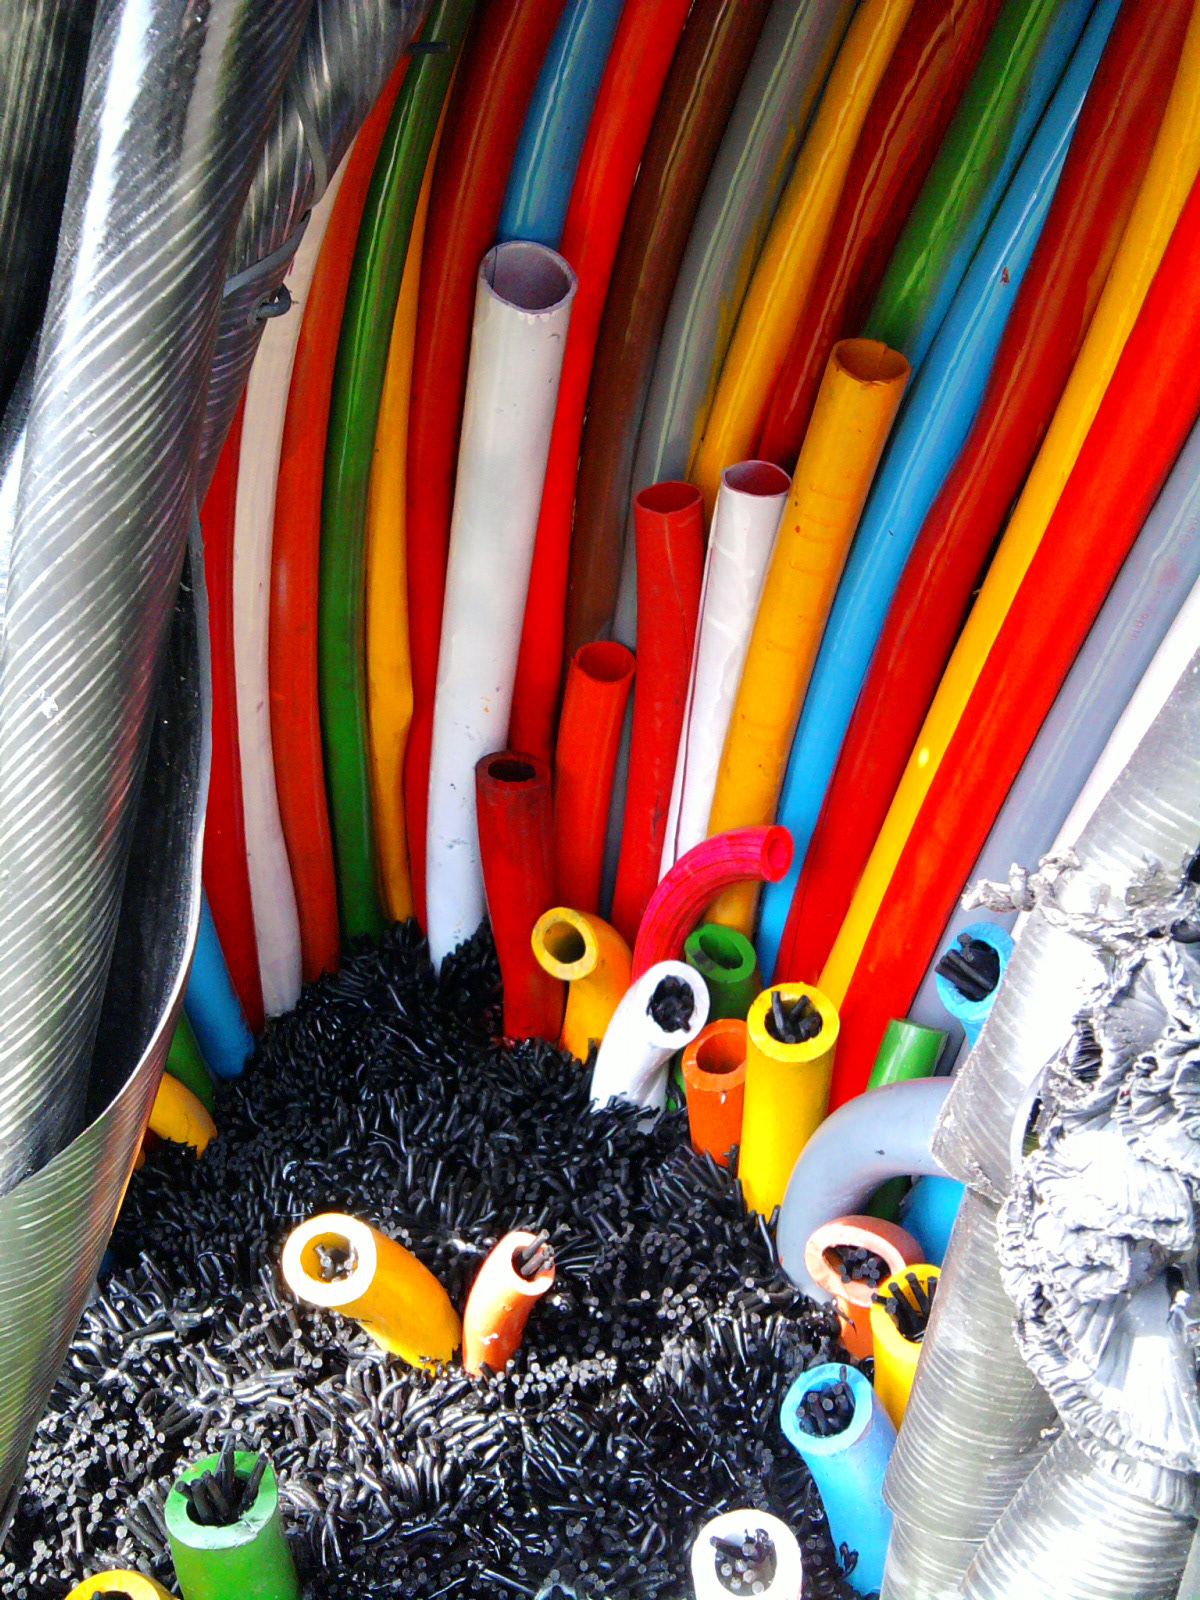 Cable waste colors sculpture